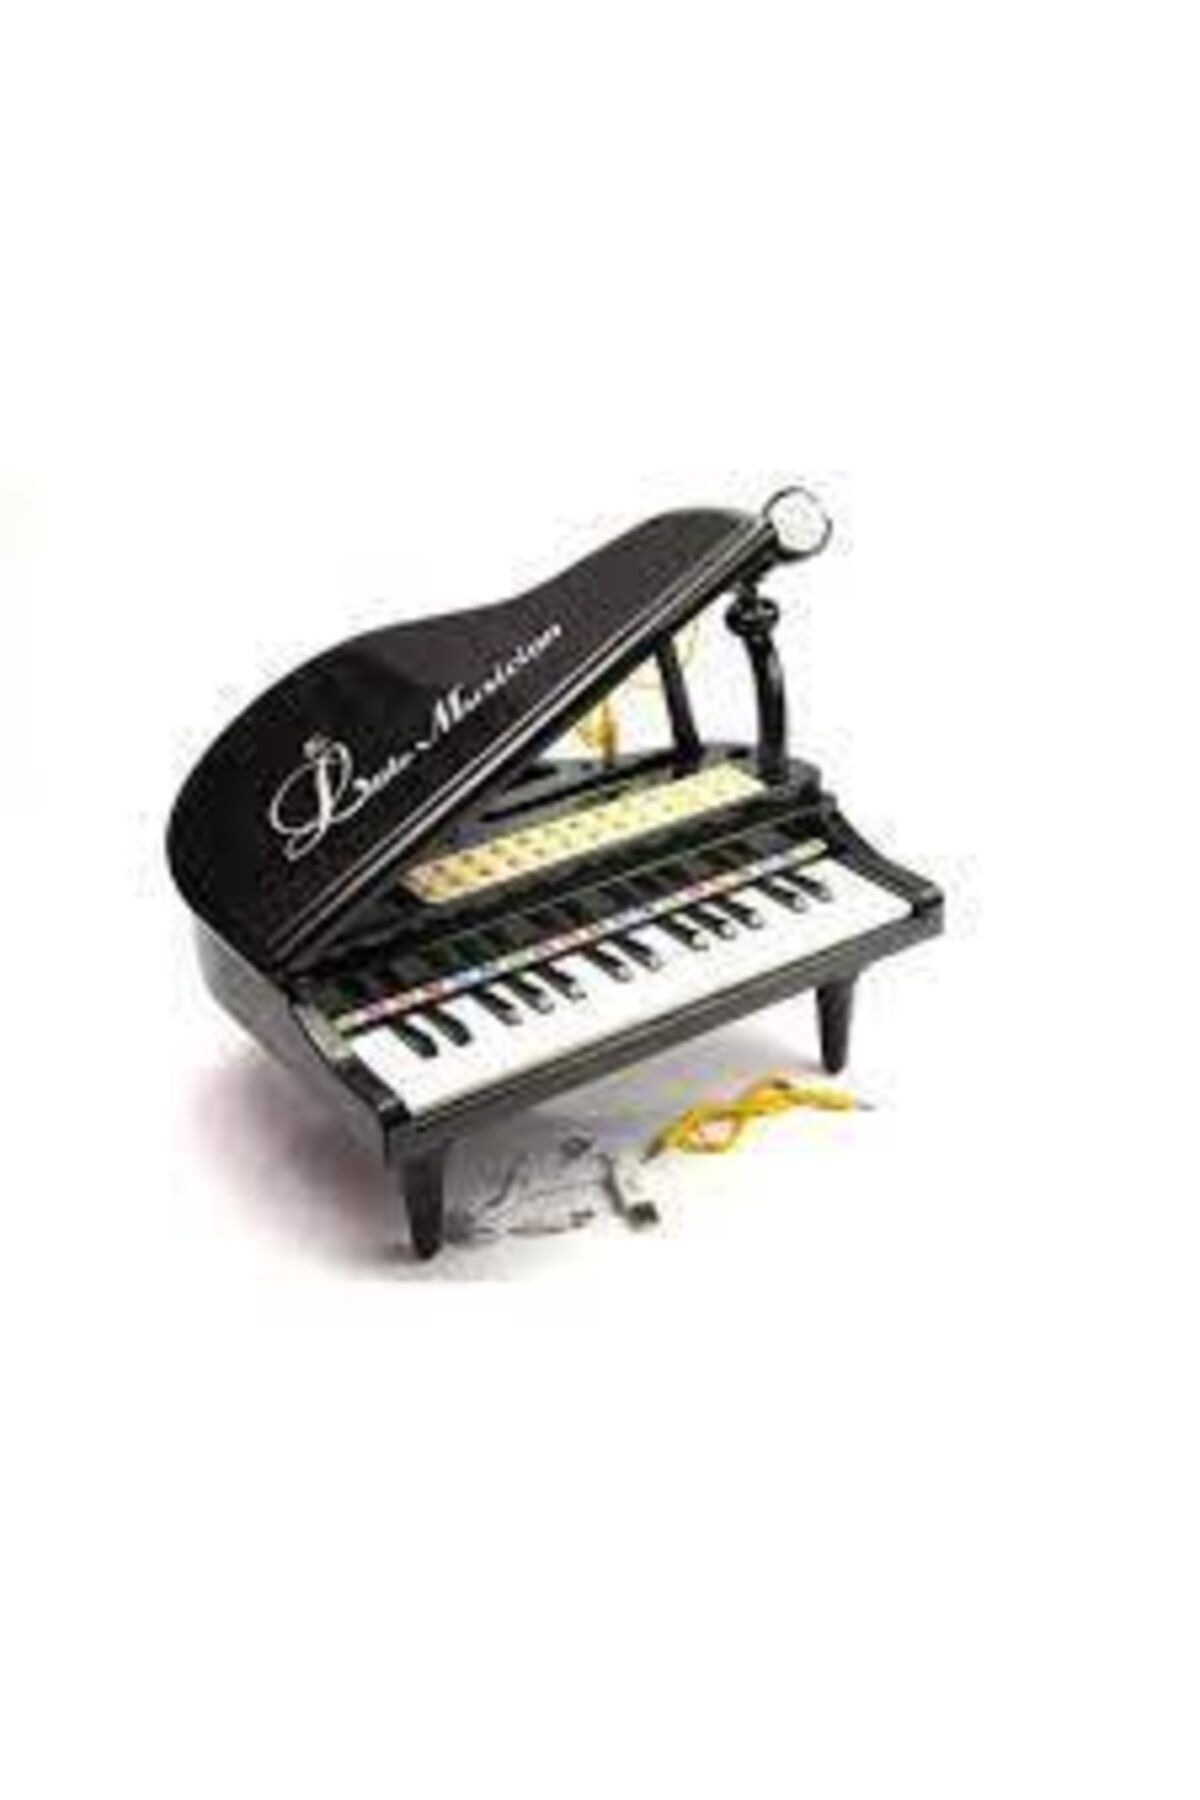 Vardem Mini Mikrofonlu Piyano